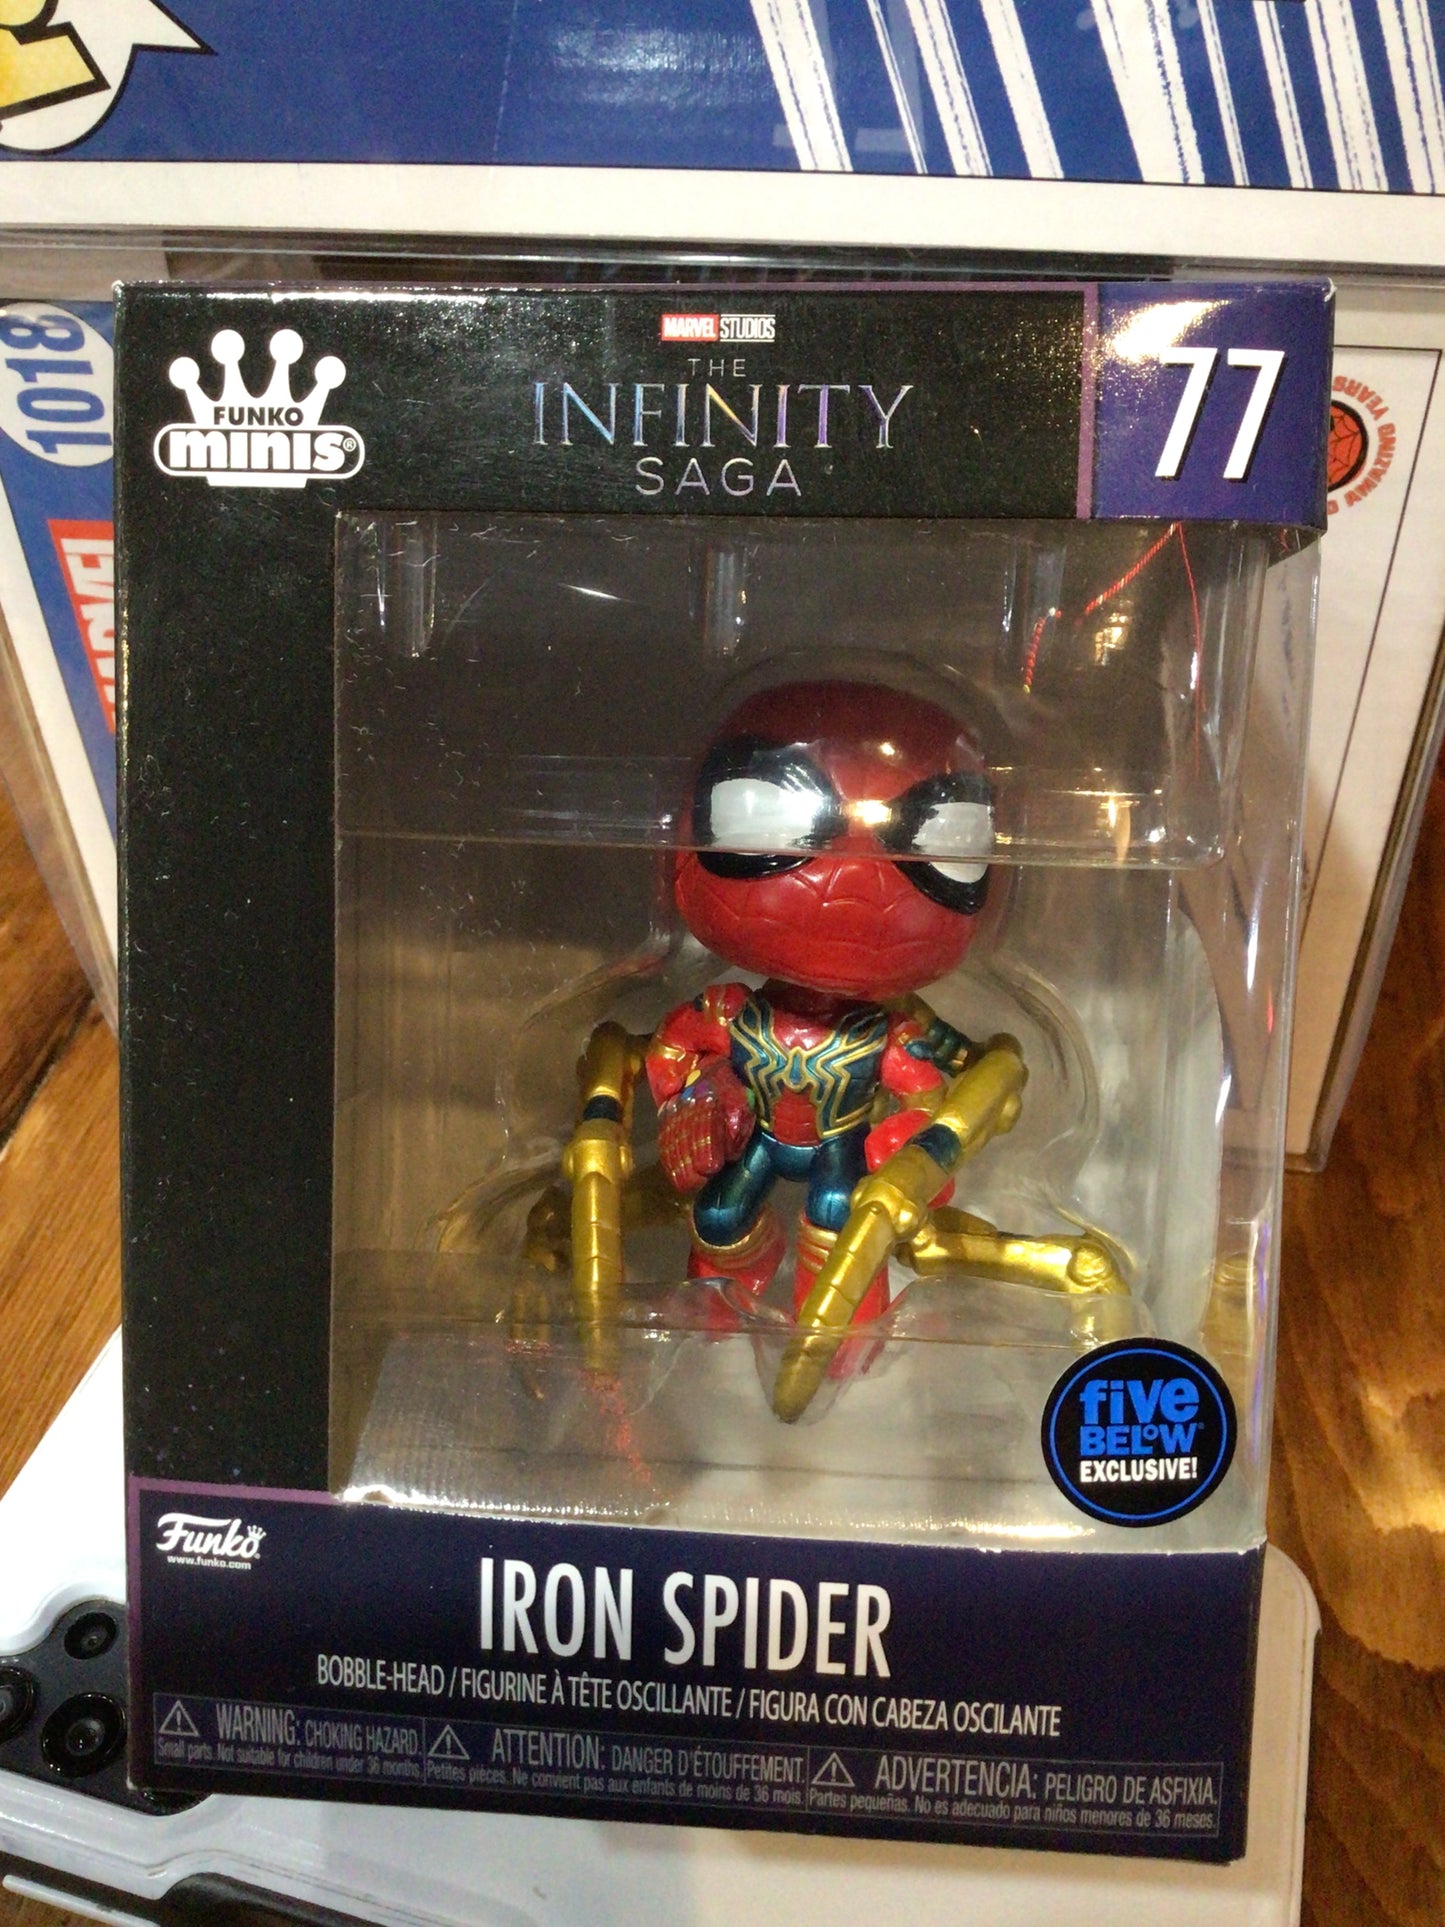 Spider-Man Iron Spider #77 - Funko mini figure exclusive